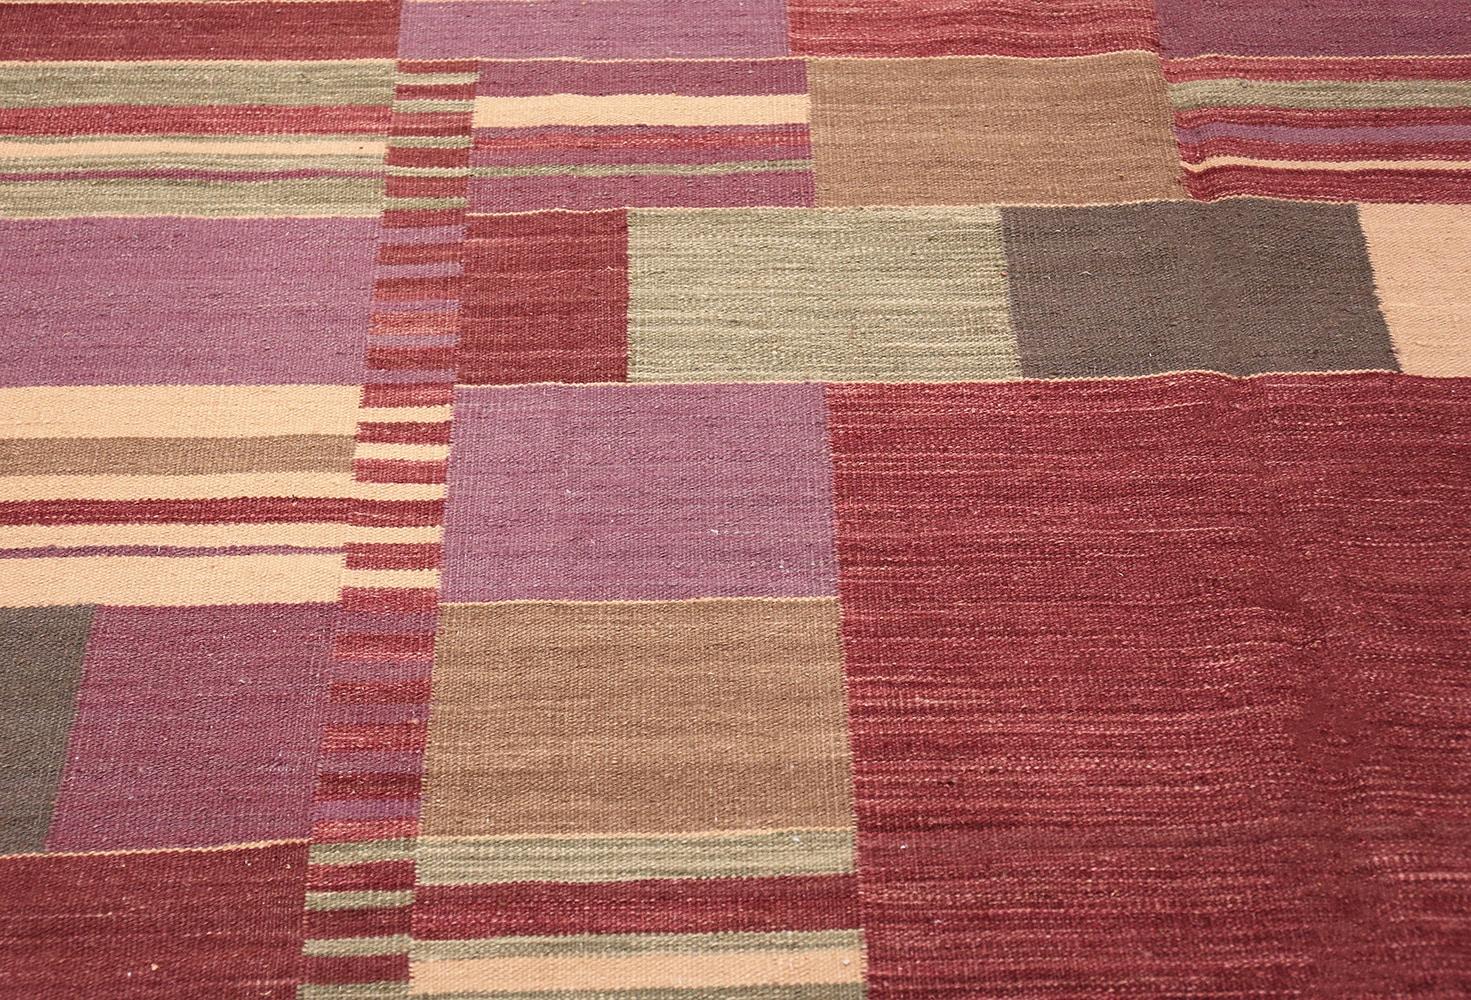 Contemporary Swedish Inspired Scandinavian Modern Kilim Carpet. Size: 7 ft x 9 ft 2 in